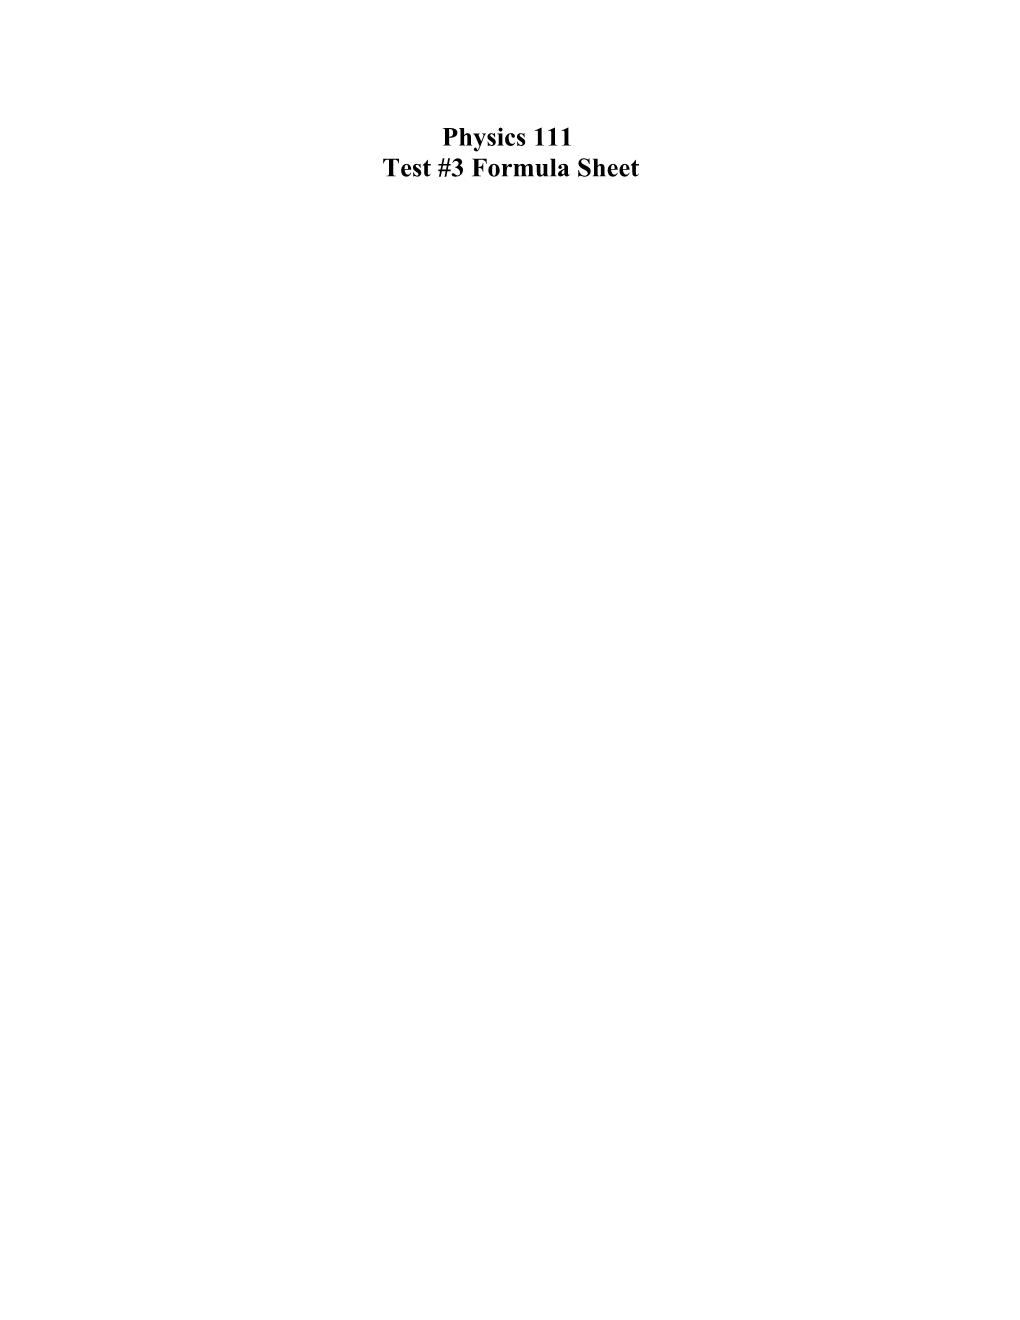 Test #3 Formula Sheet